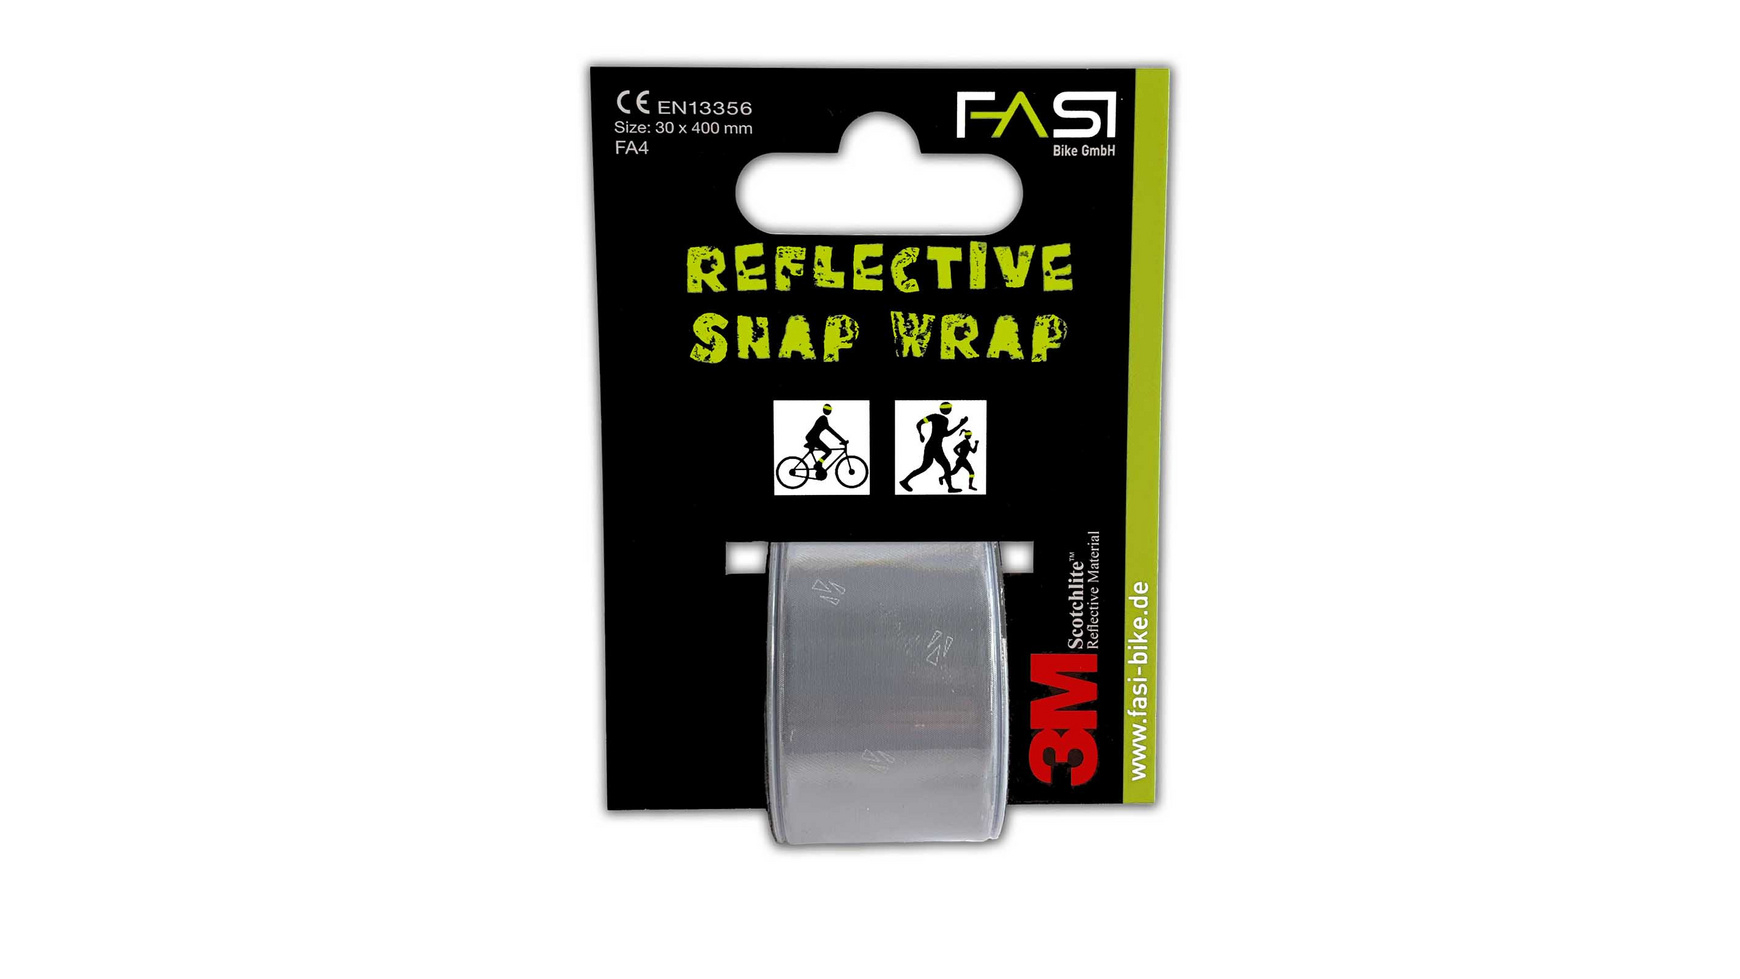 Fasi FASI Reflektorband Snap Wrap Reflektoren